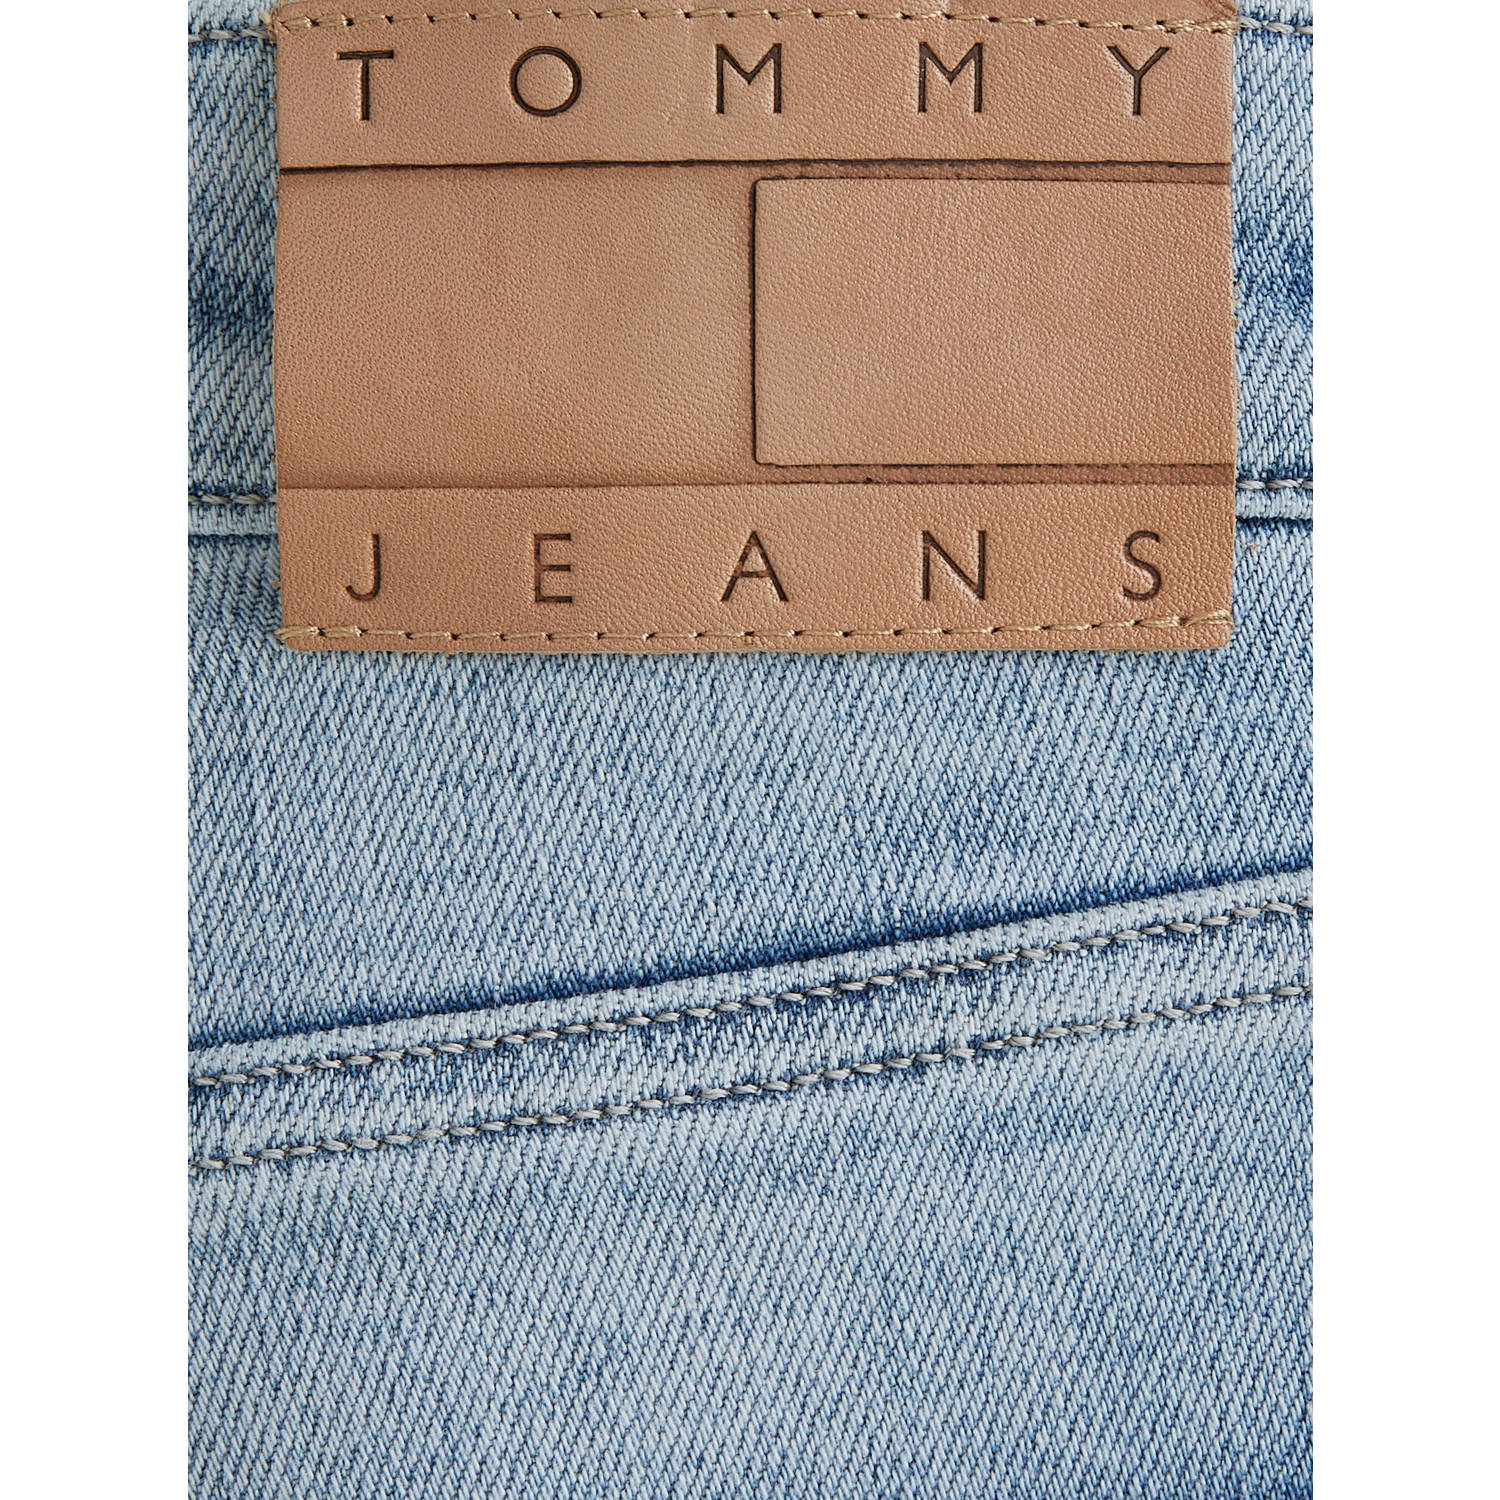 Tommy Jeans slim fit jeans AUSTIN denim light